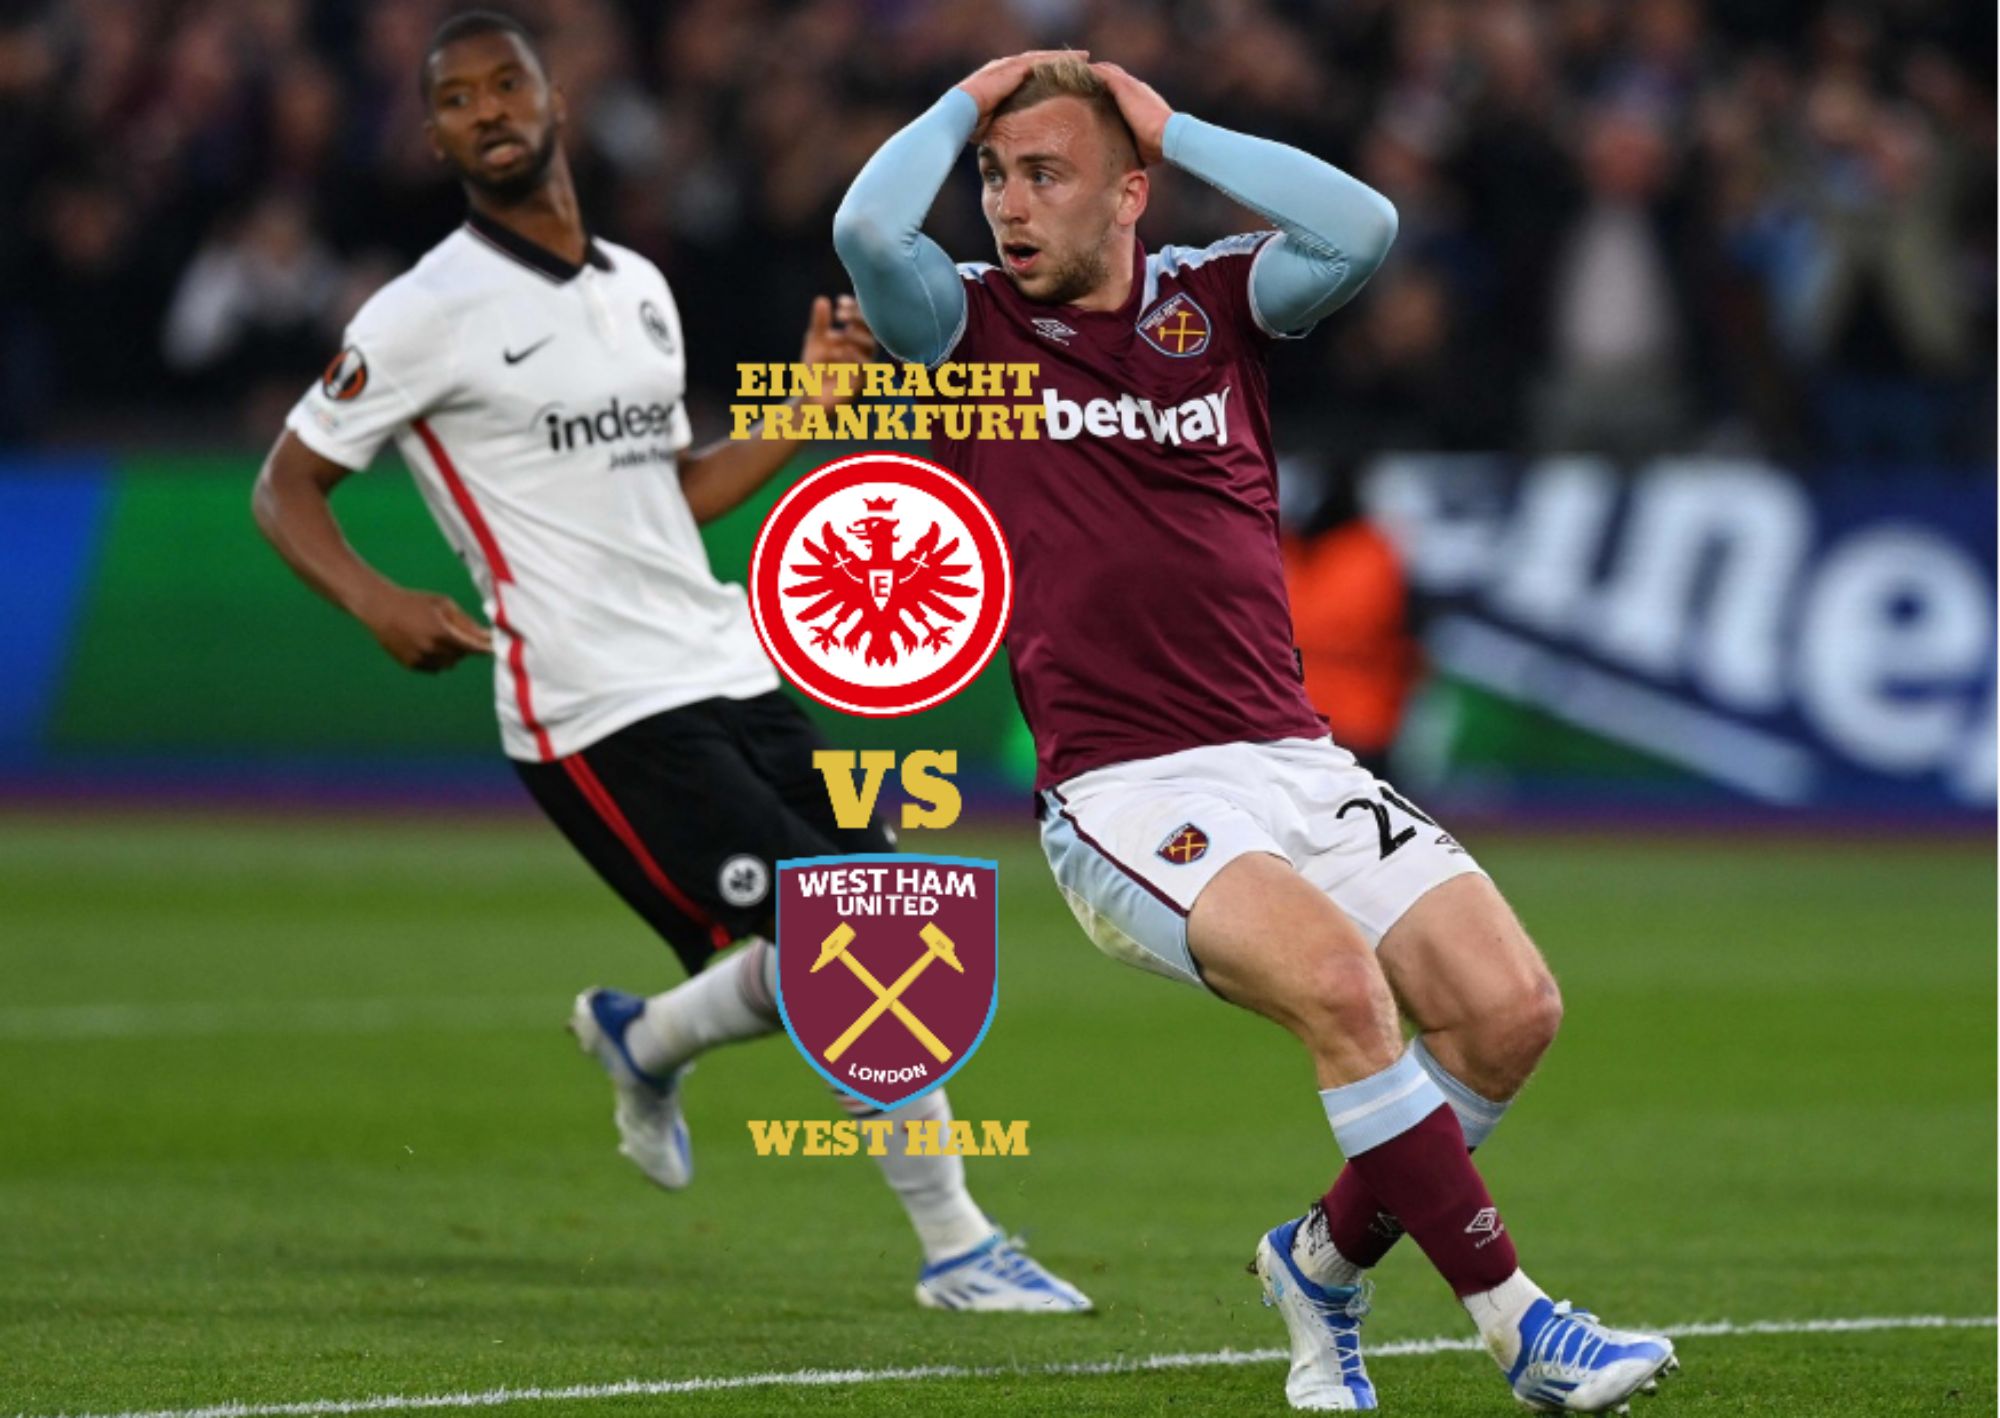 Frankfurt vs West Ham – Preview And Predictions